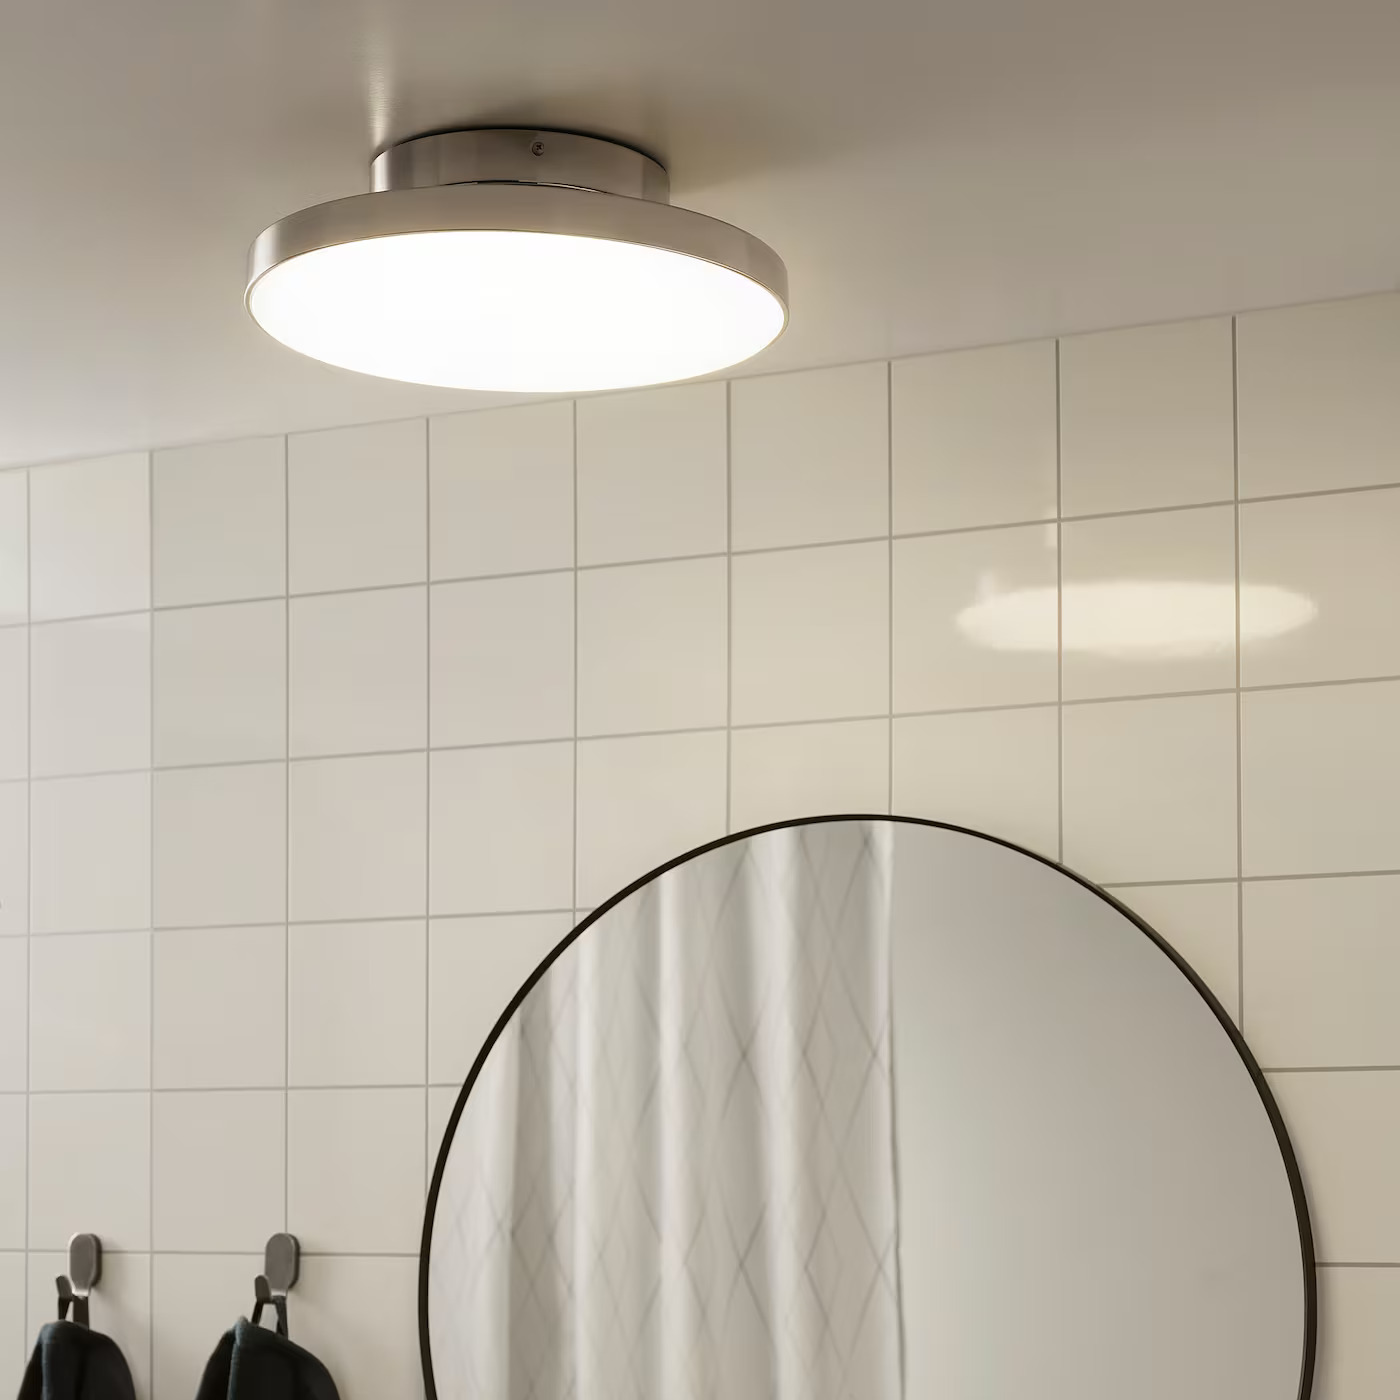 ceiling light in bathroom